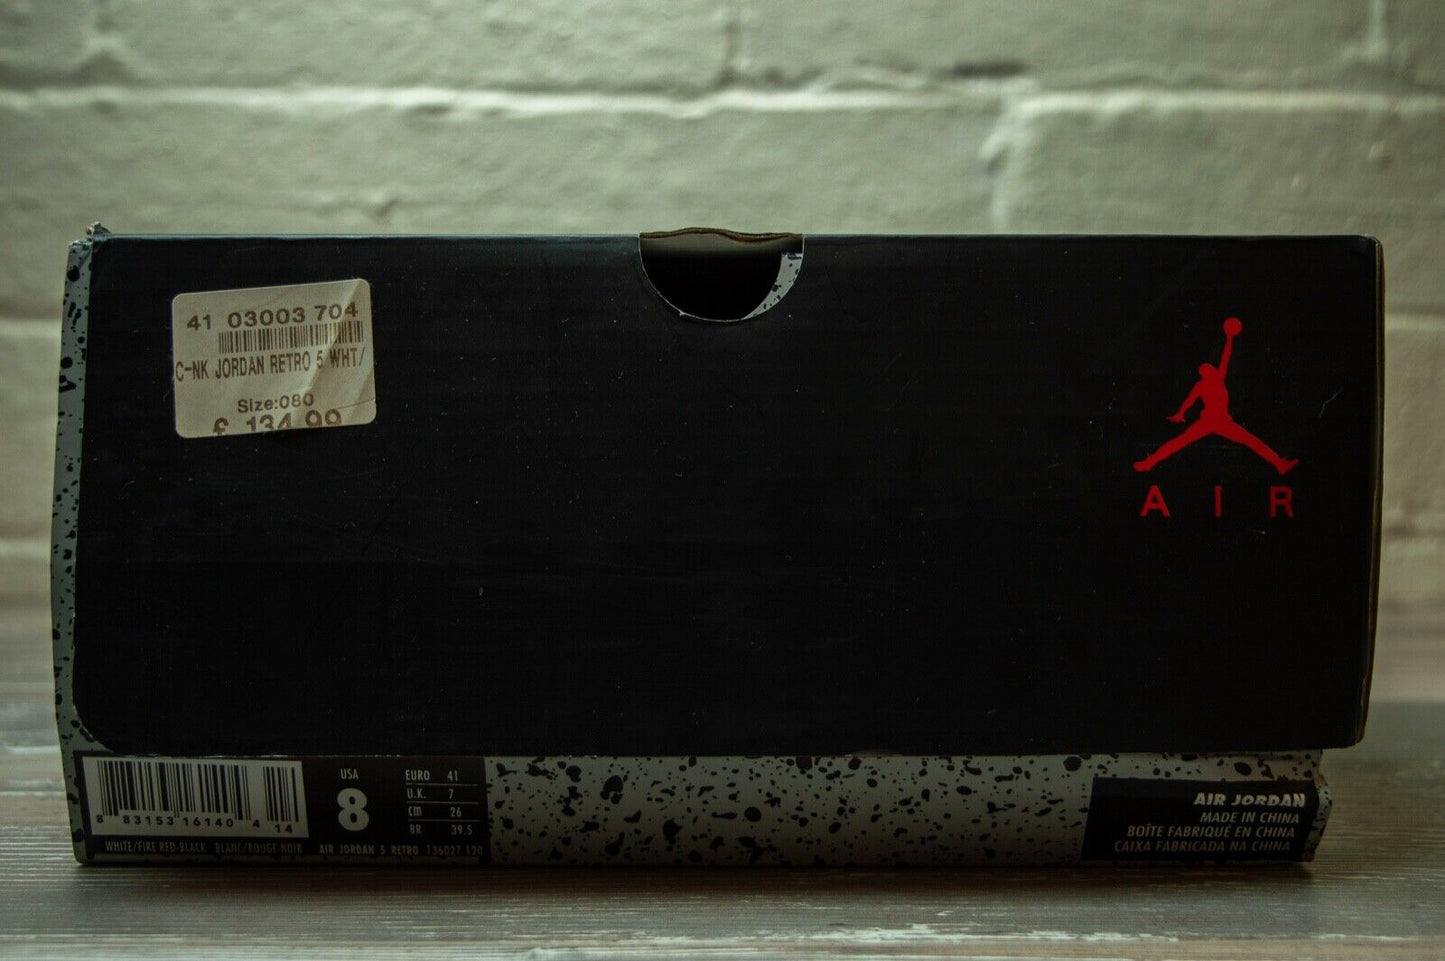 Nike Air Jordan 5 Retro Fire Red Black Tongue 136027 120 -Nike Air Jordan 5 Retro Fire Red Black Tongue 136027 120 -